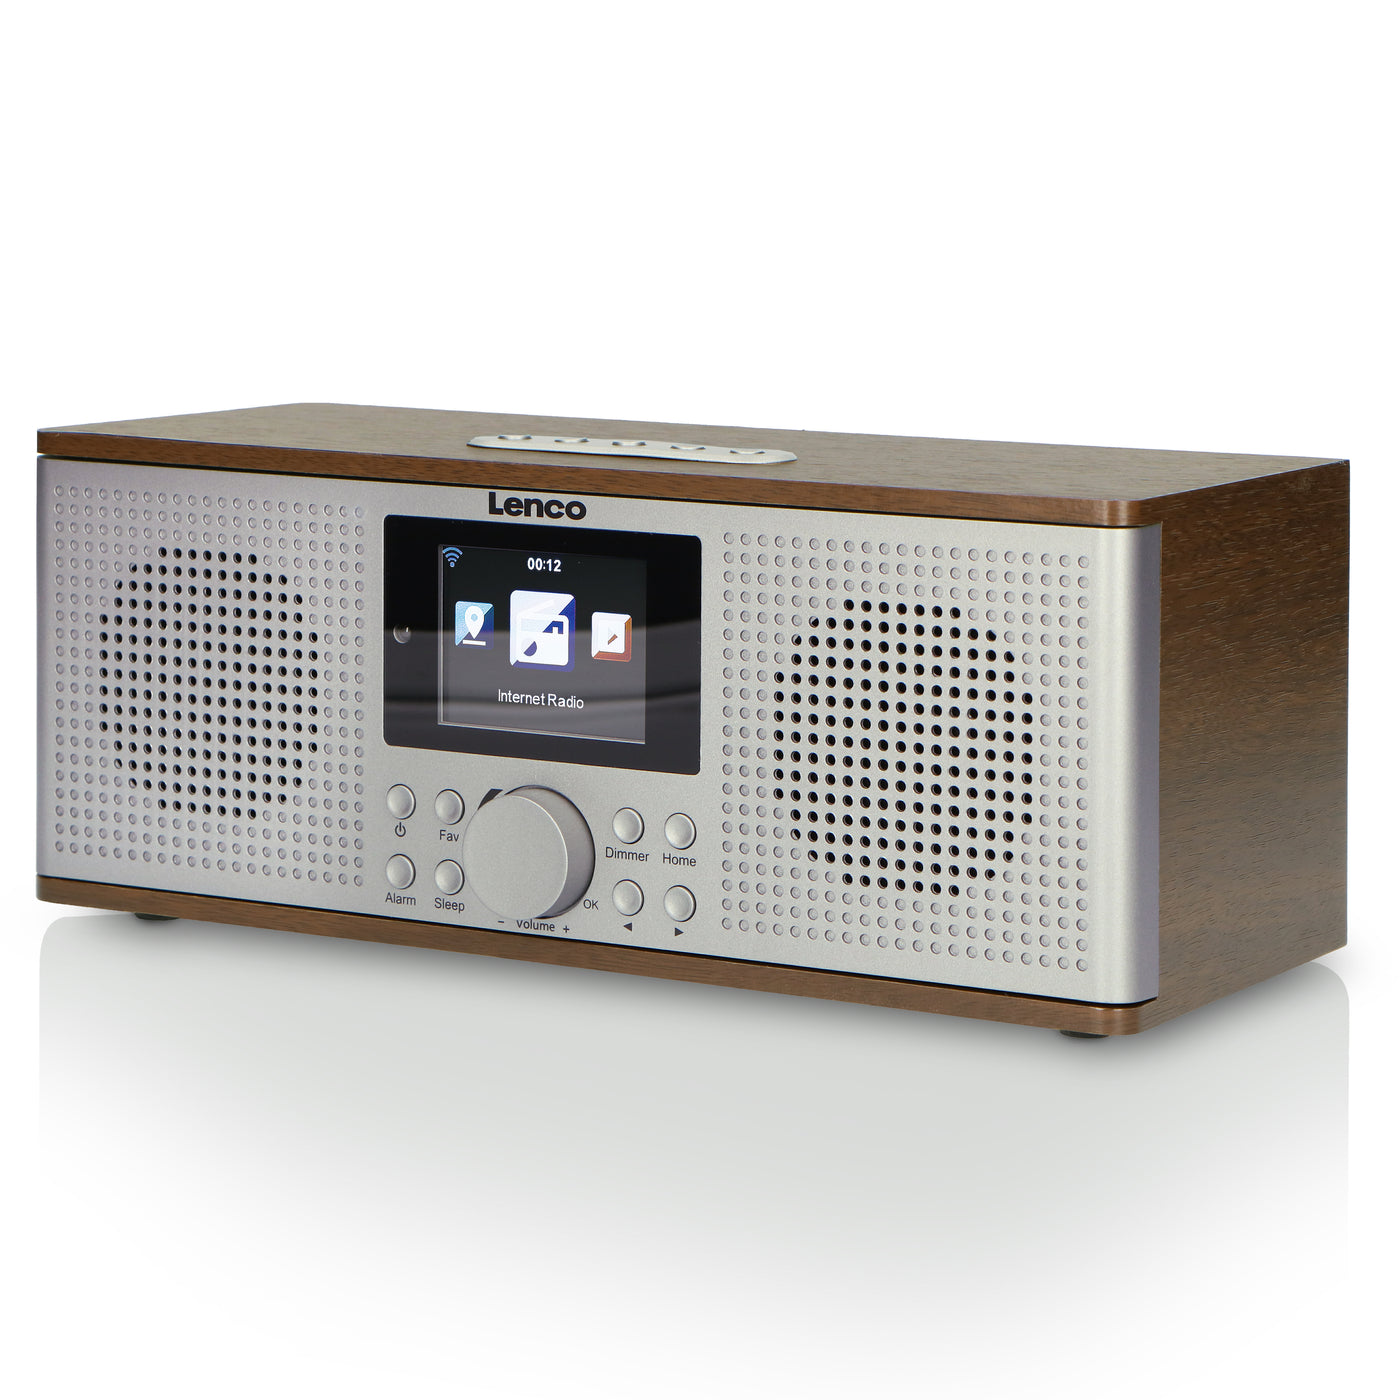 W with FM radio, DAB+, Lenco-Catalog and Internet – Bluetooth® DIR-170WA - LENCO Smart